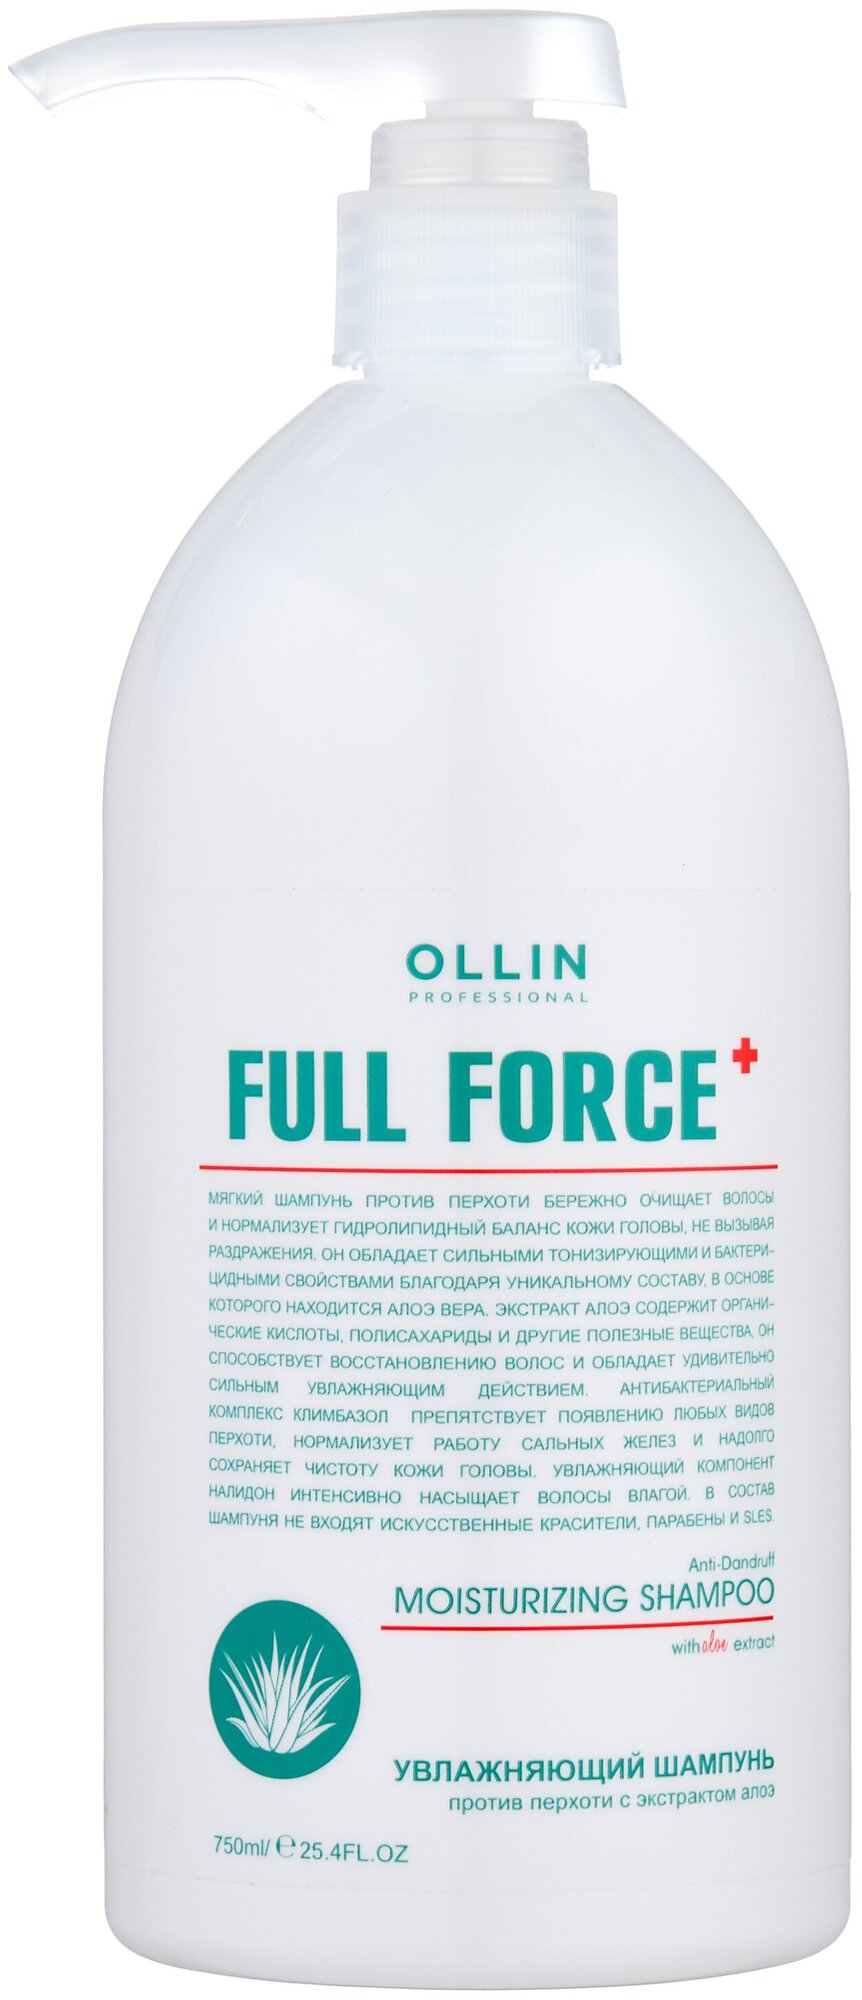 OLLIN Professional шампунь Full Force Moisturizing Увлажняющий против перхоти с экстрактом алоэ, 750 мл